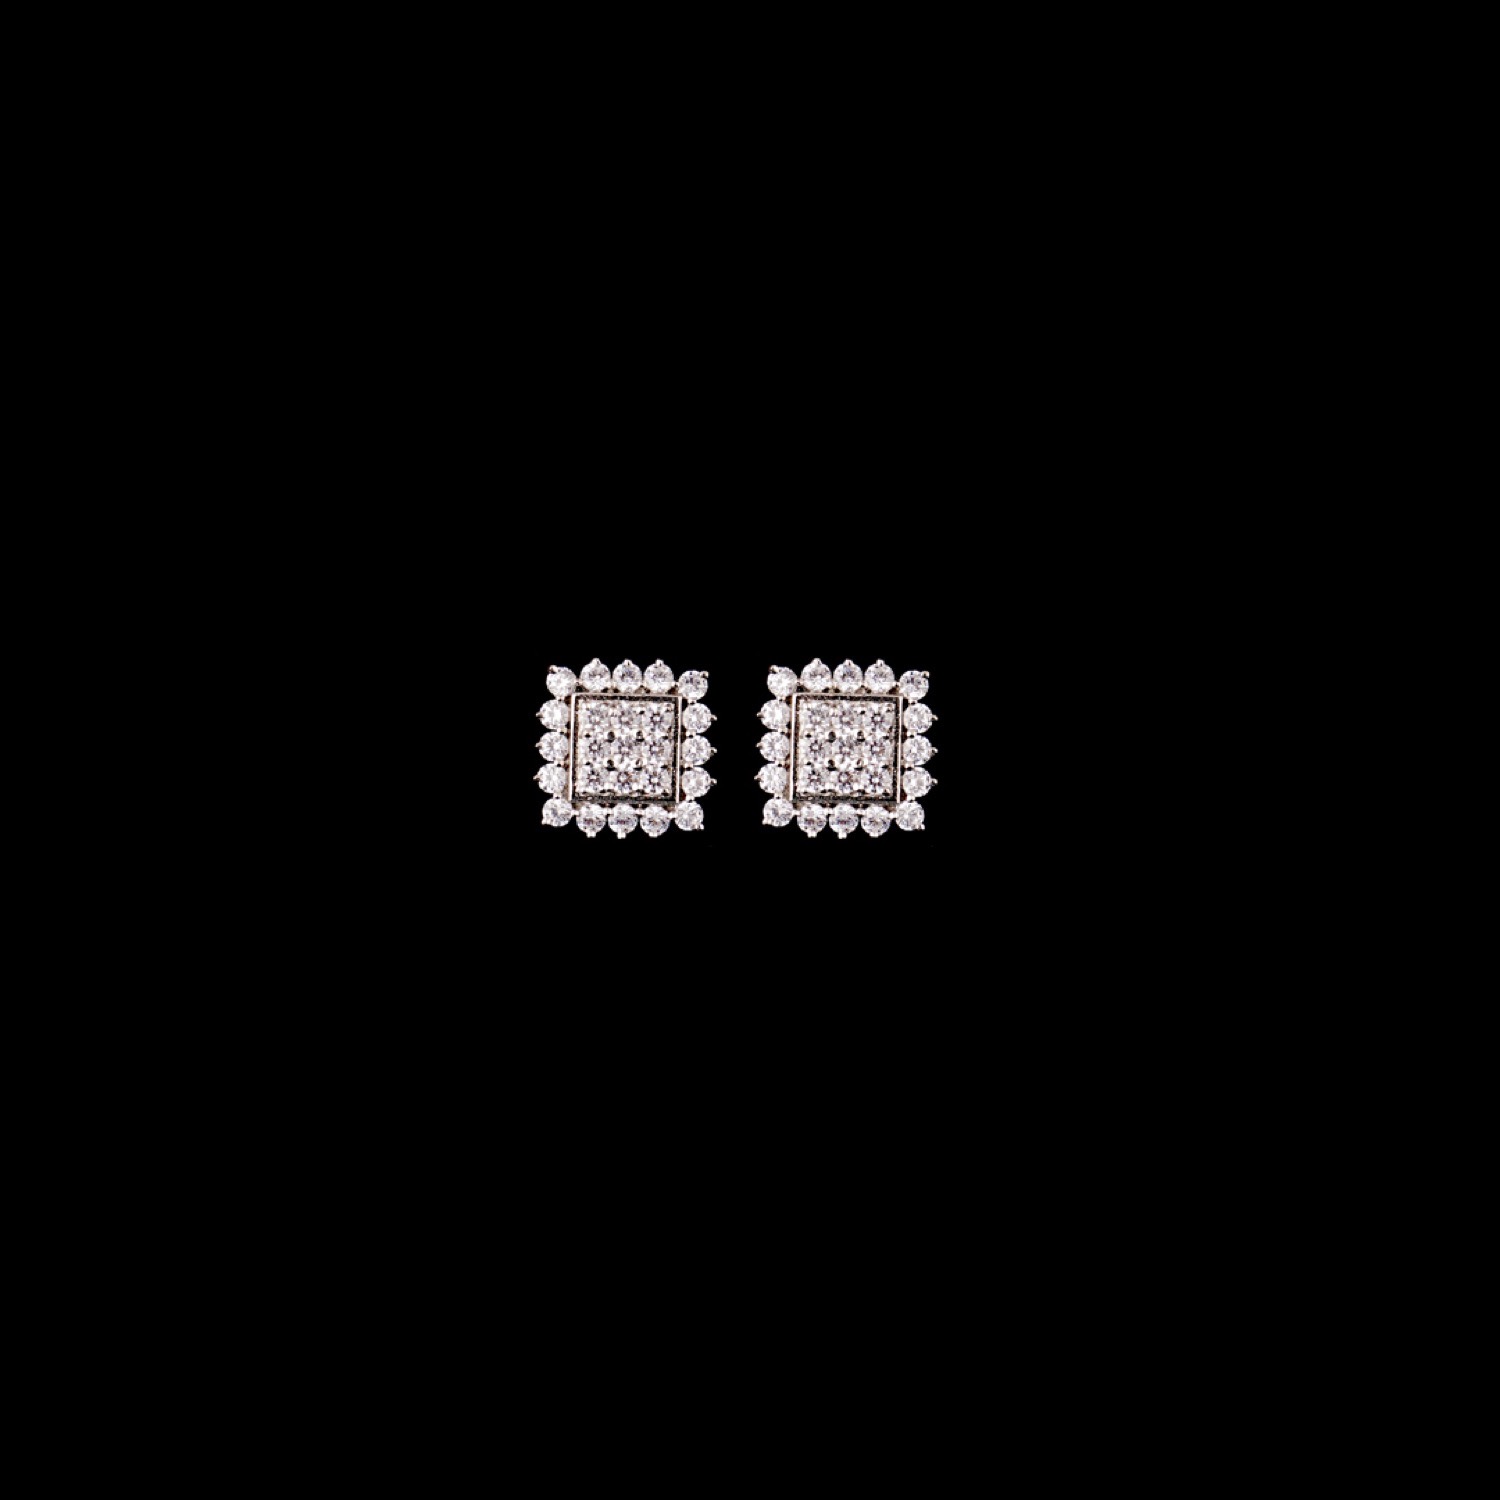 varam_earrings_102022_round_cut_white_stone_square_shaped_silver_earrings-1